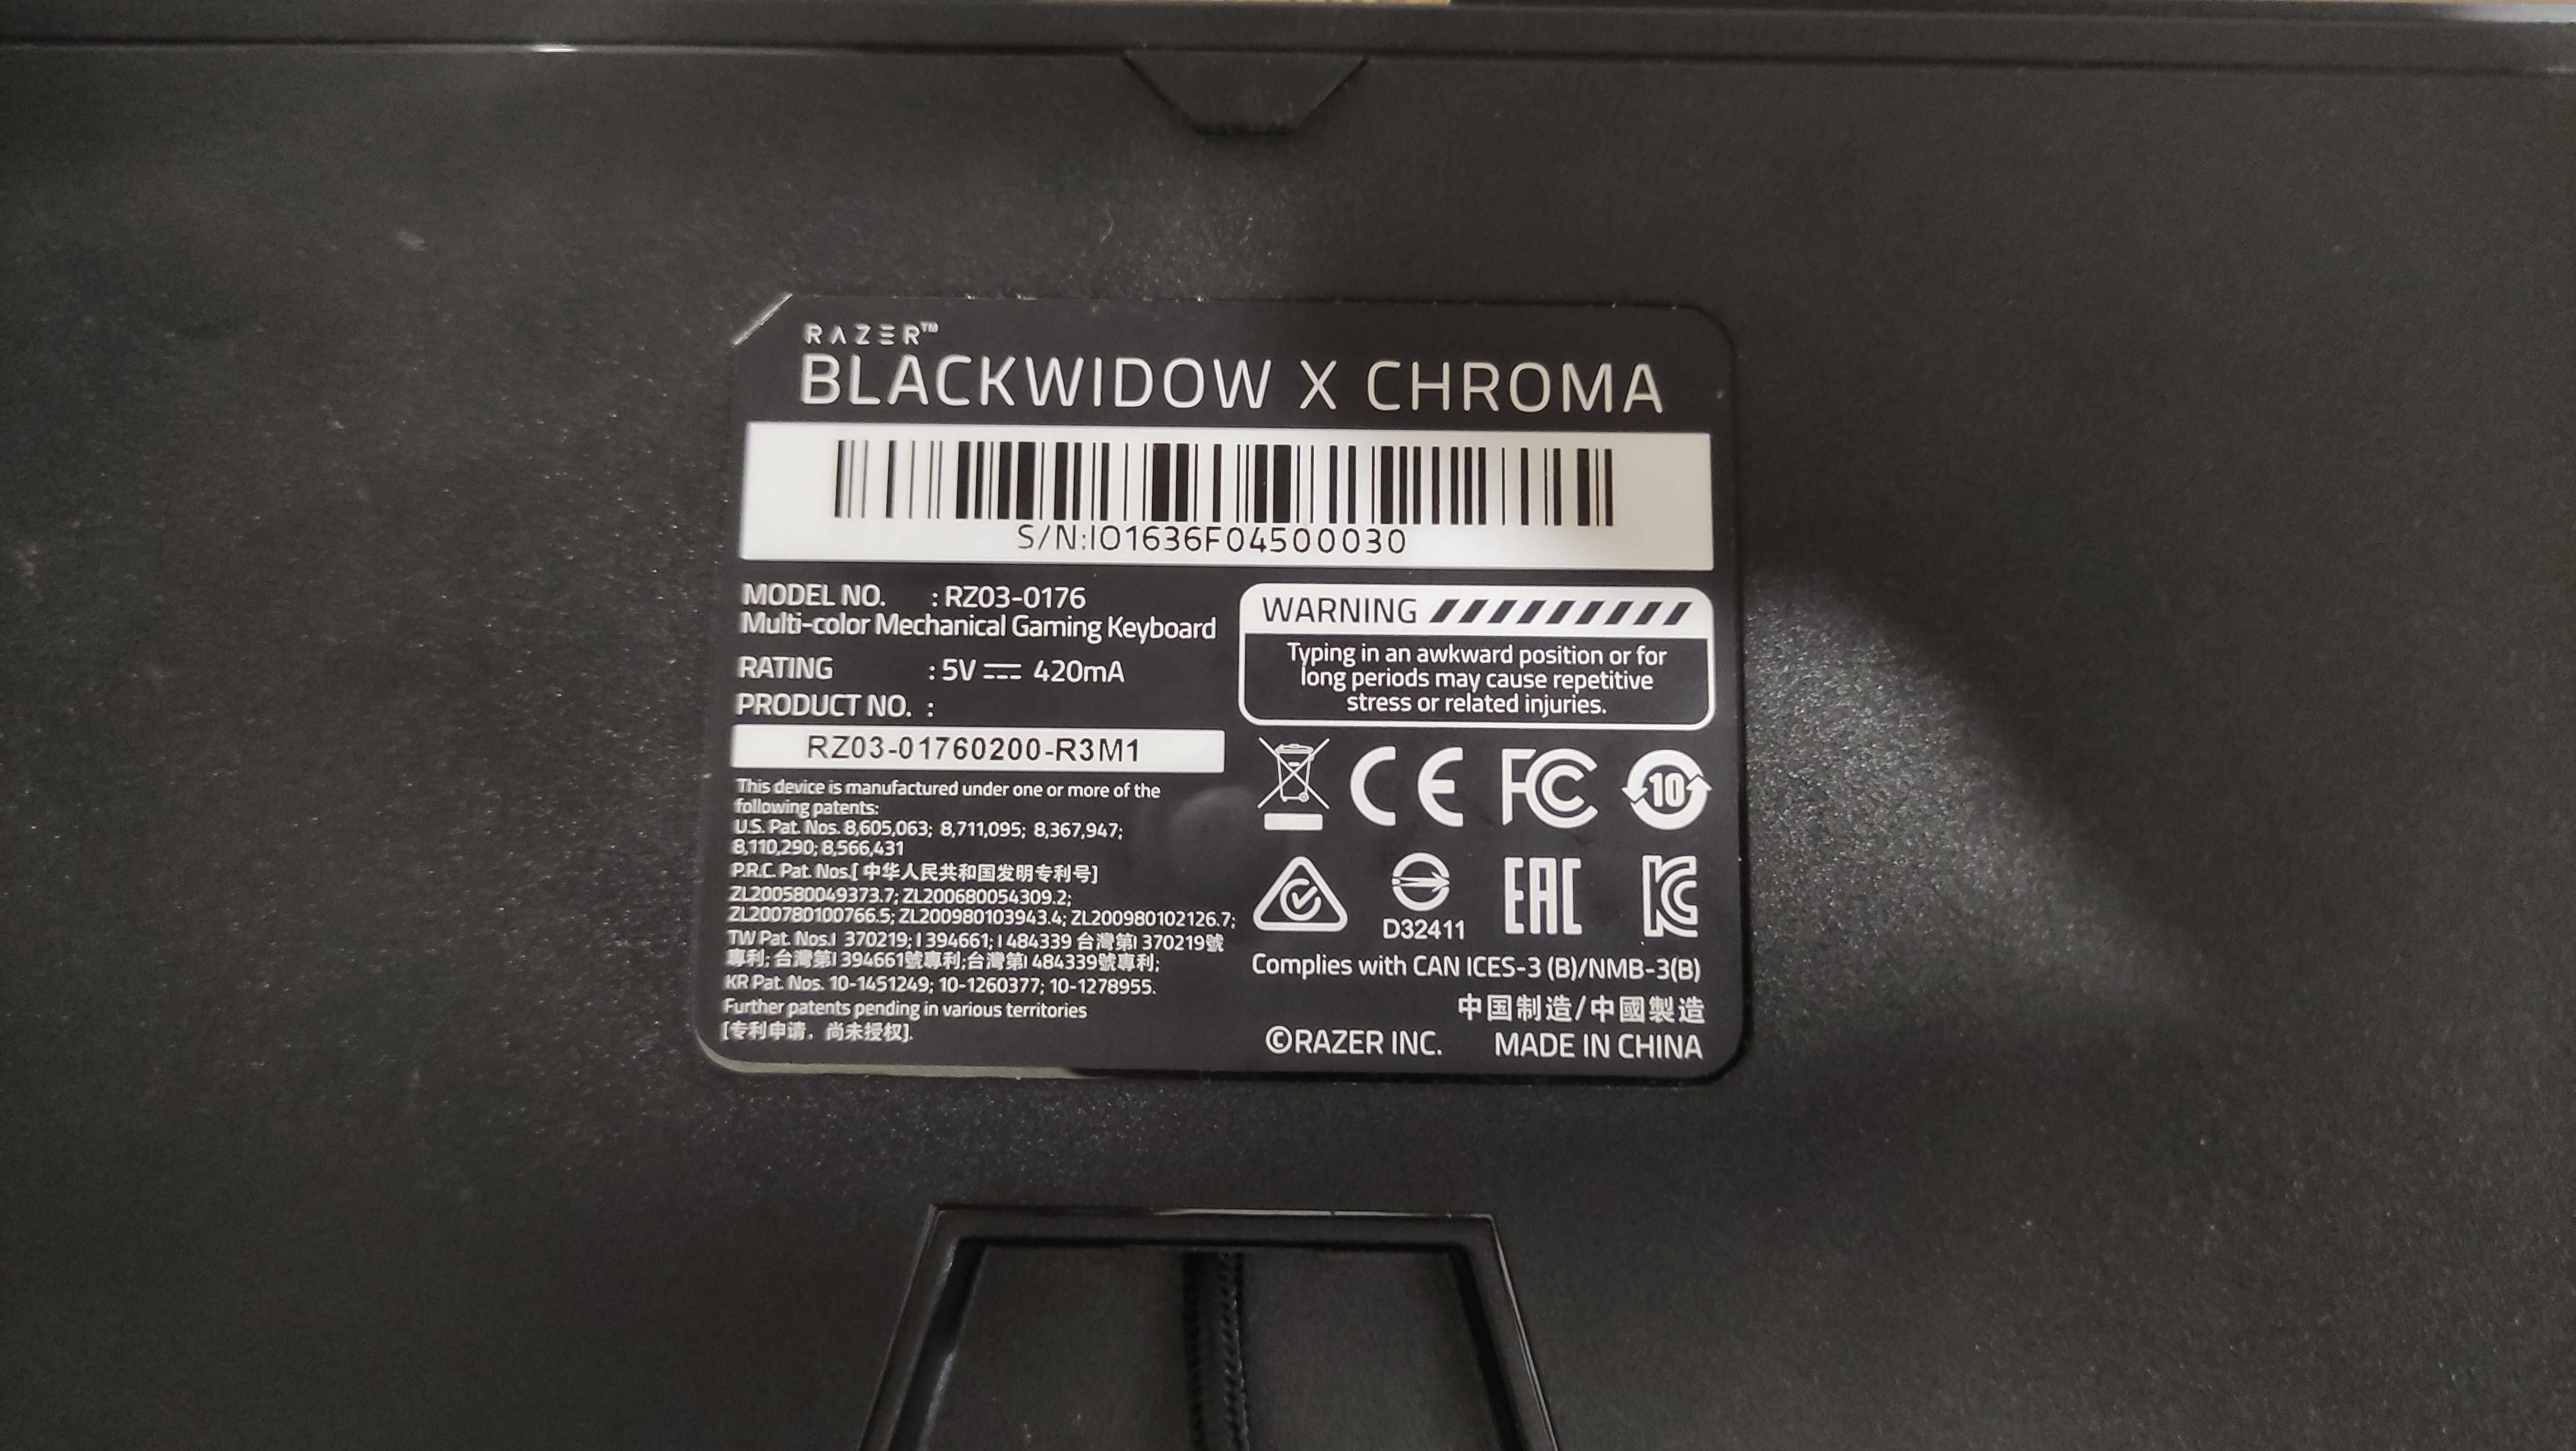 Razer Blackwidow x Chroma + GRATIS Razer L33t pack